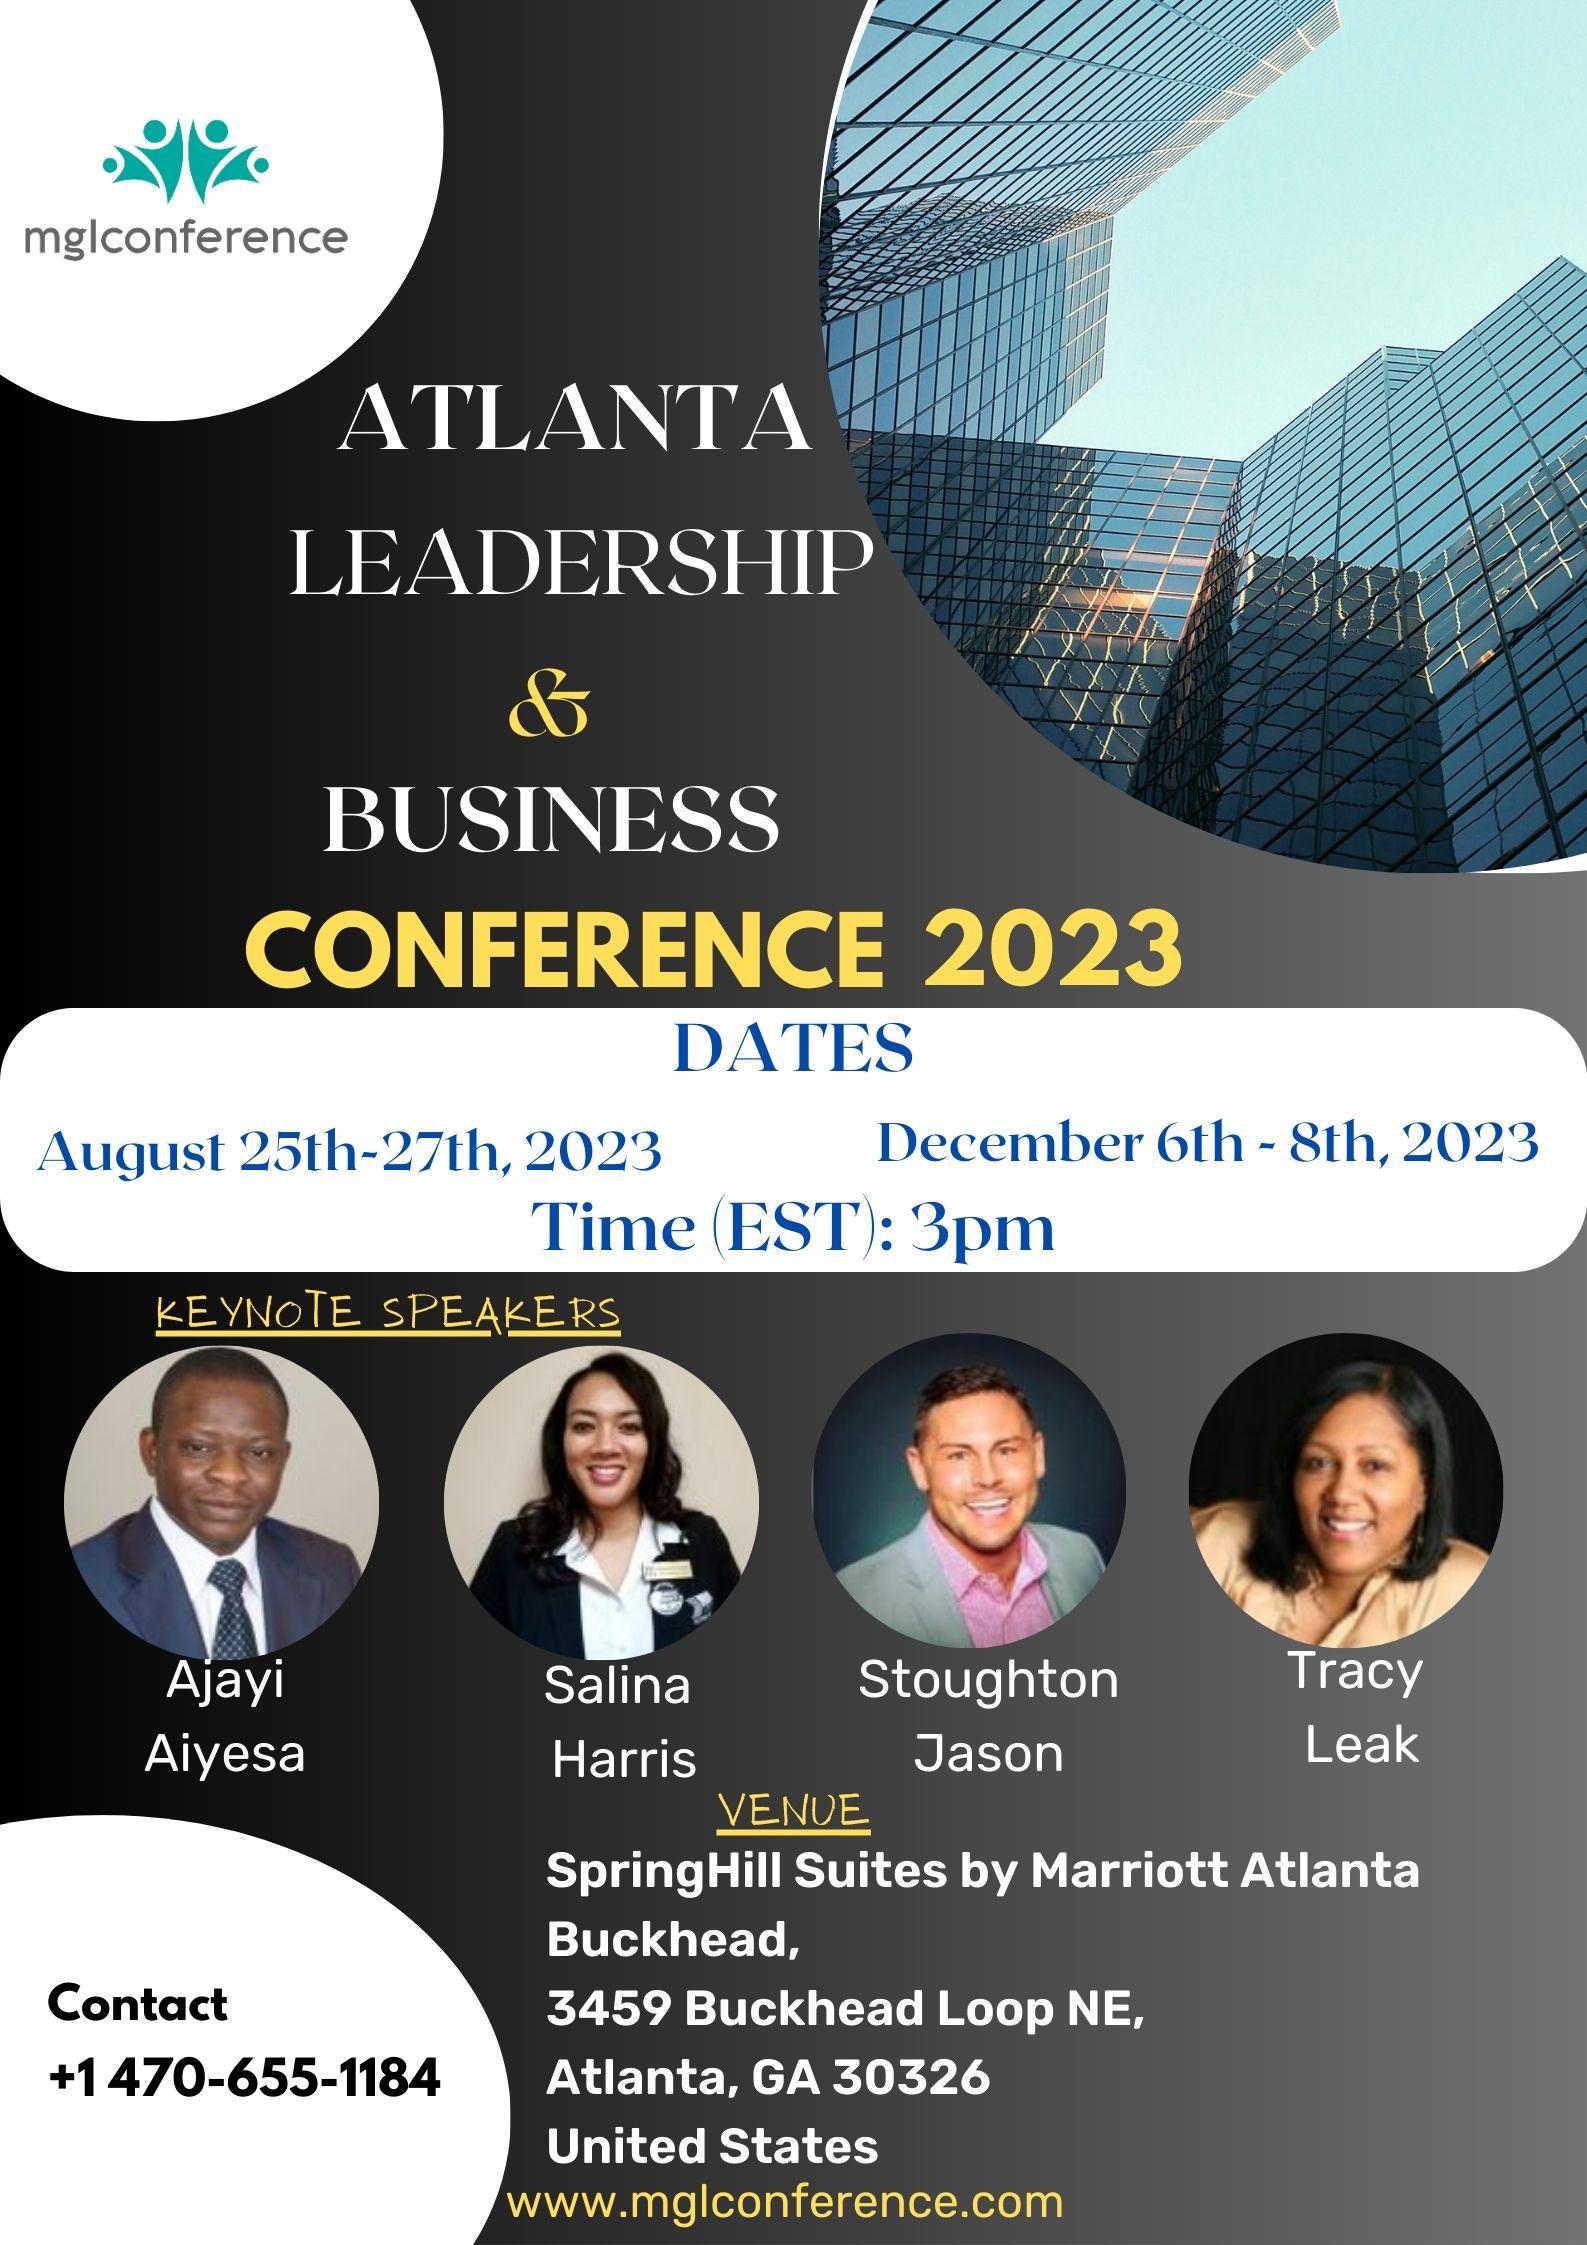 Atlanta Leadership & Business Conference 2023